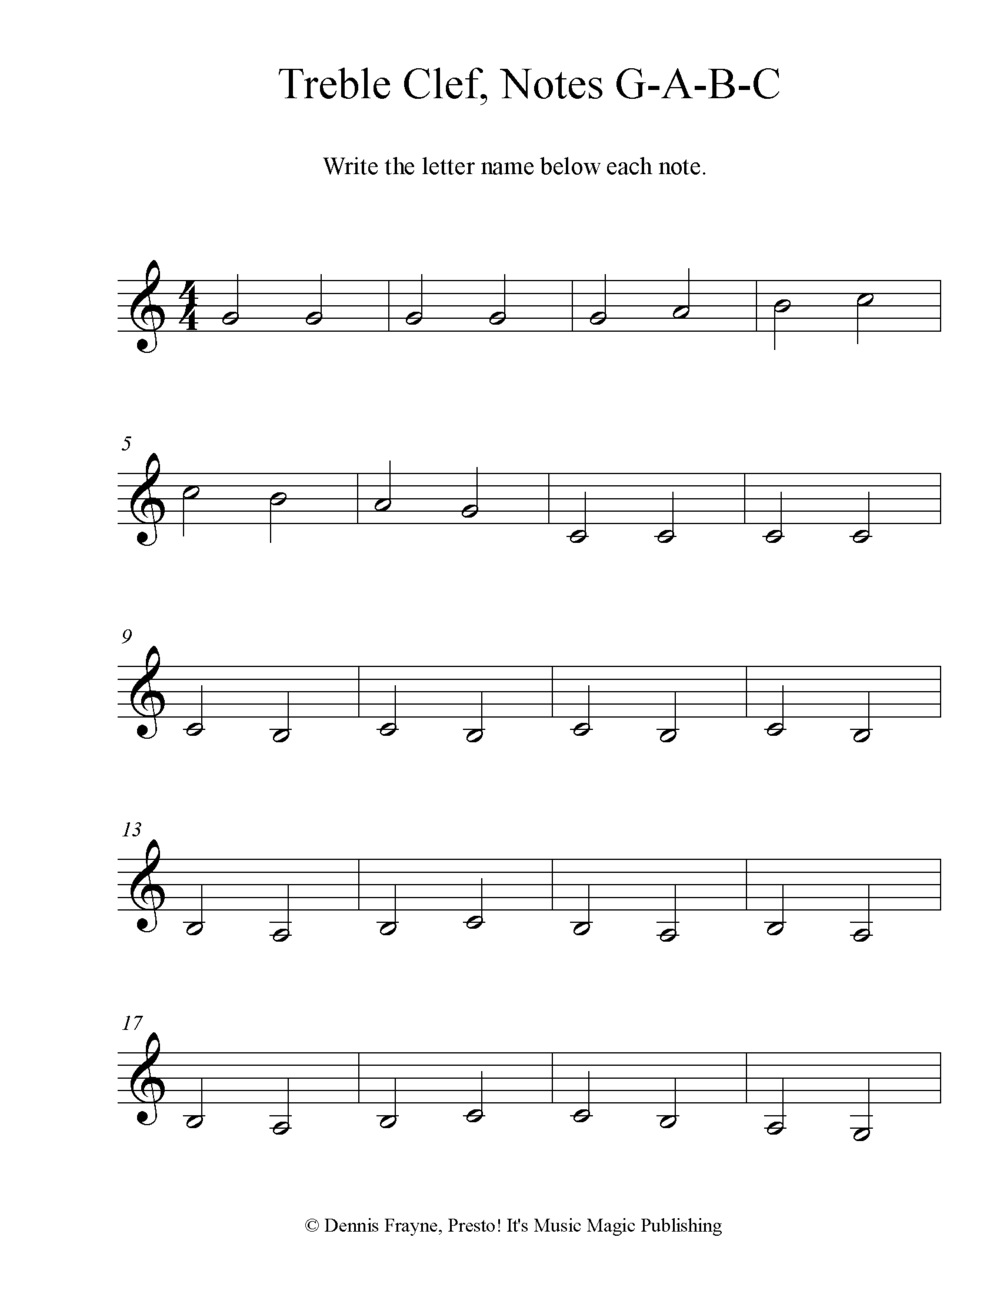 FREE! Printable Music Note Naming Worksheets — Presto! It